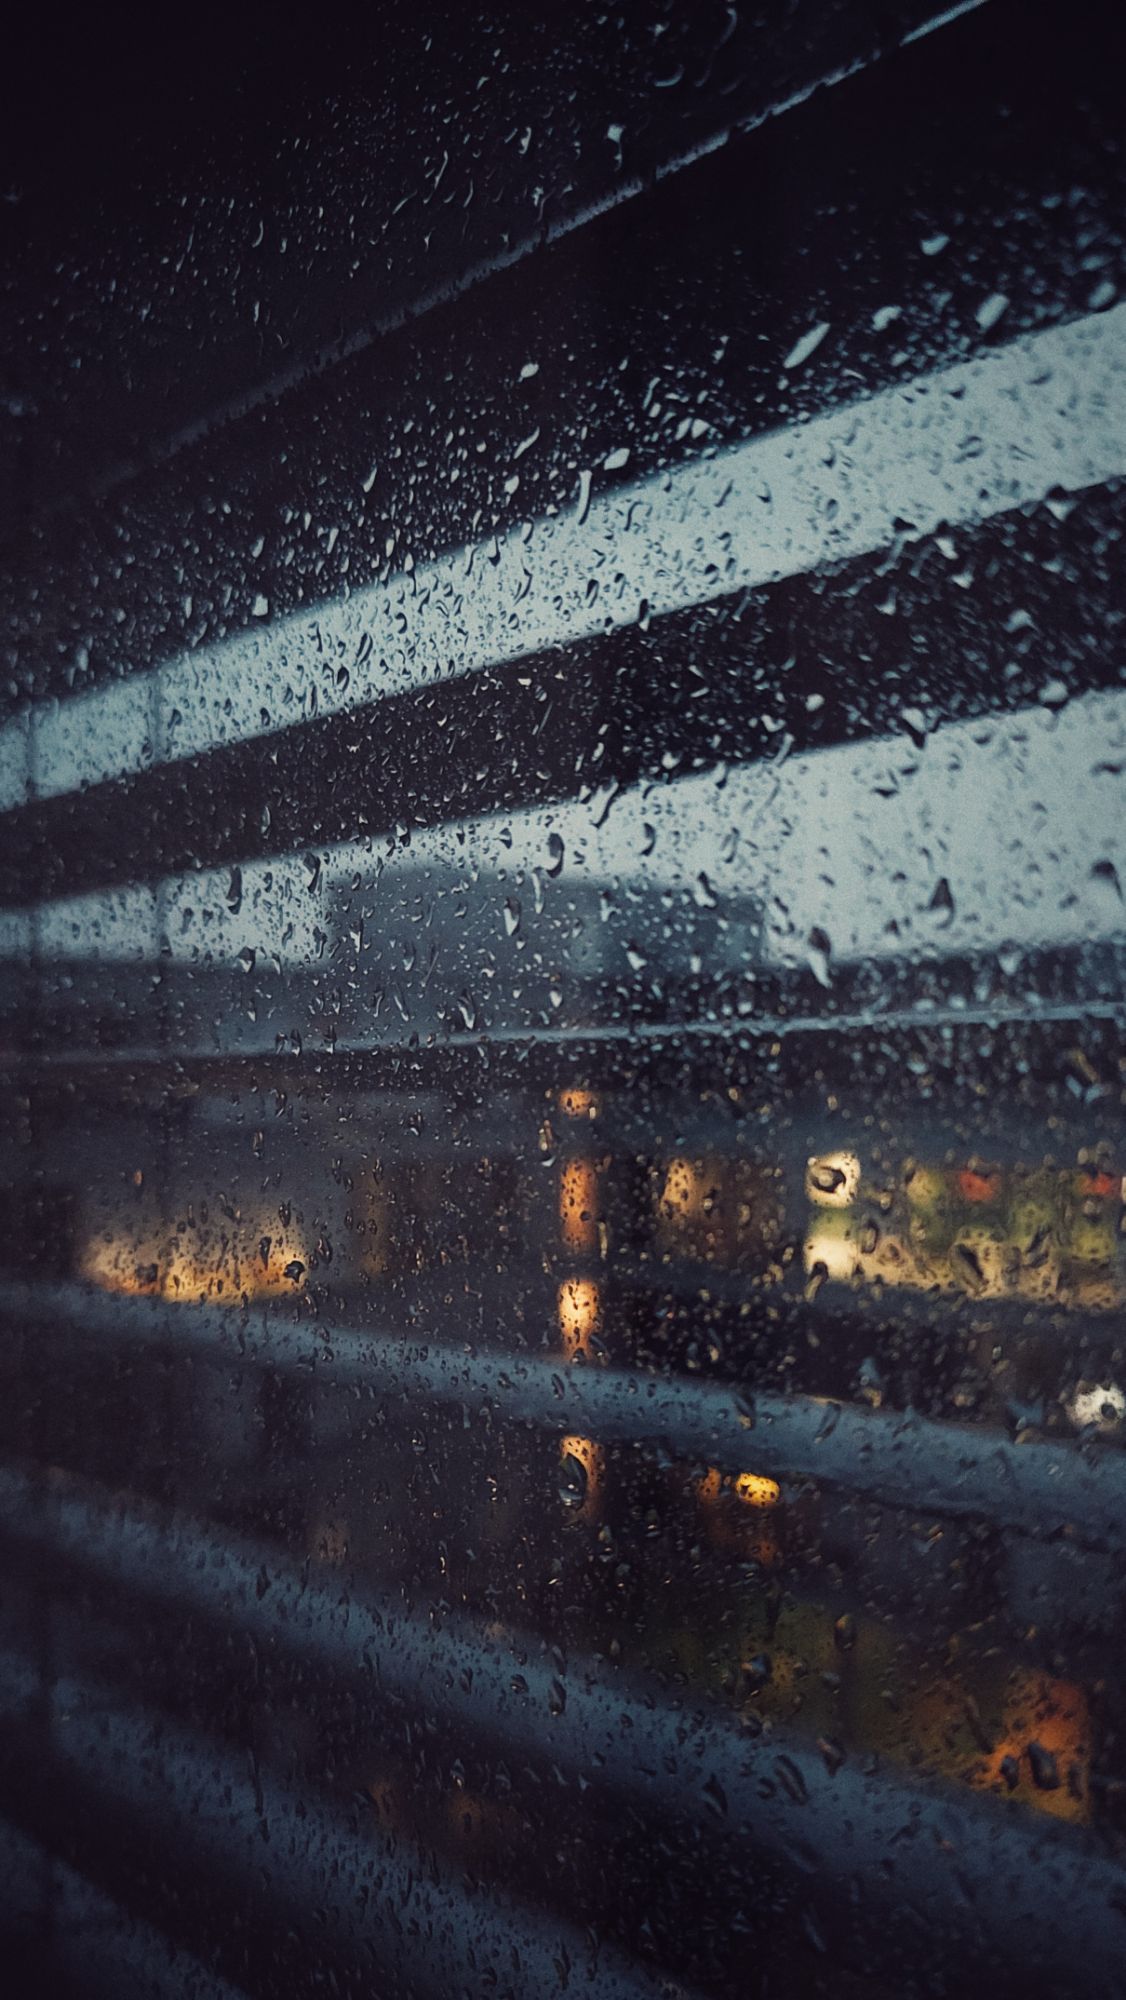 Window blinds and office lights behind rainy windowpane.